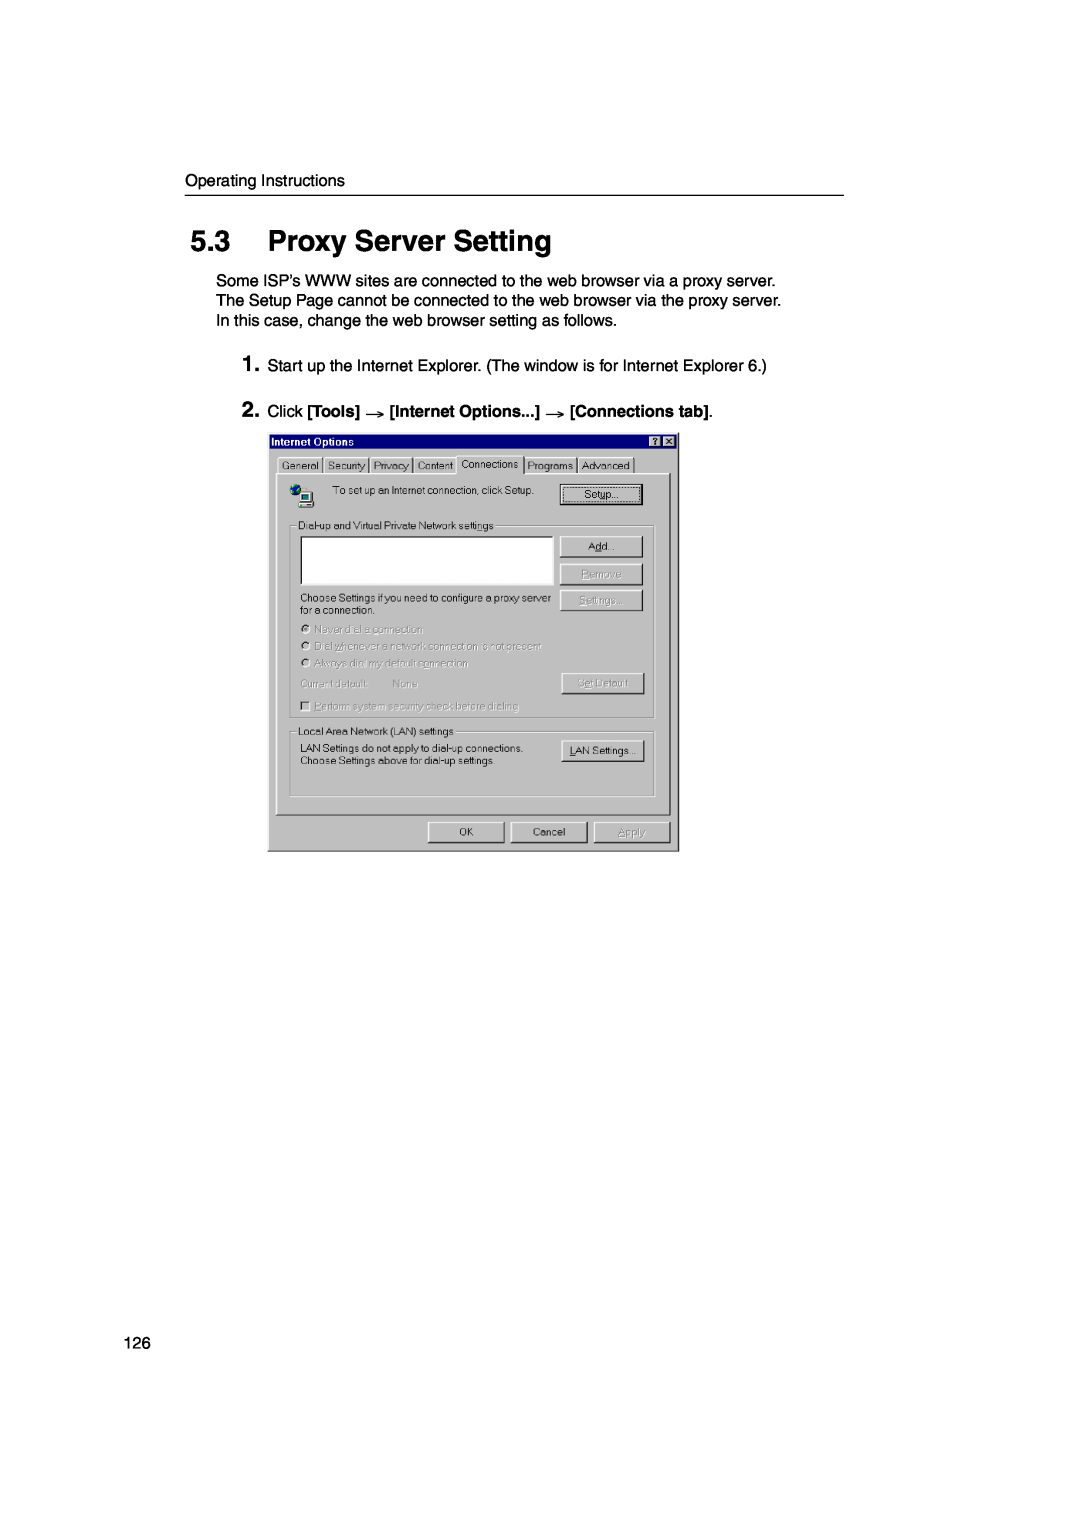 Panasonic KX-HGW600 manual Proxy Server Setting, Click Tools Internet Options... Connections tab 